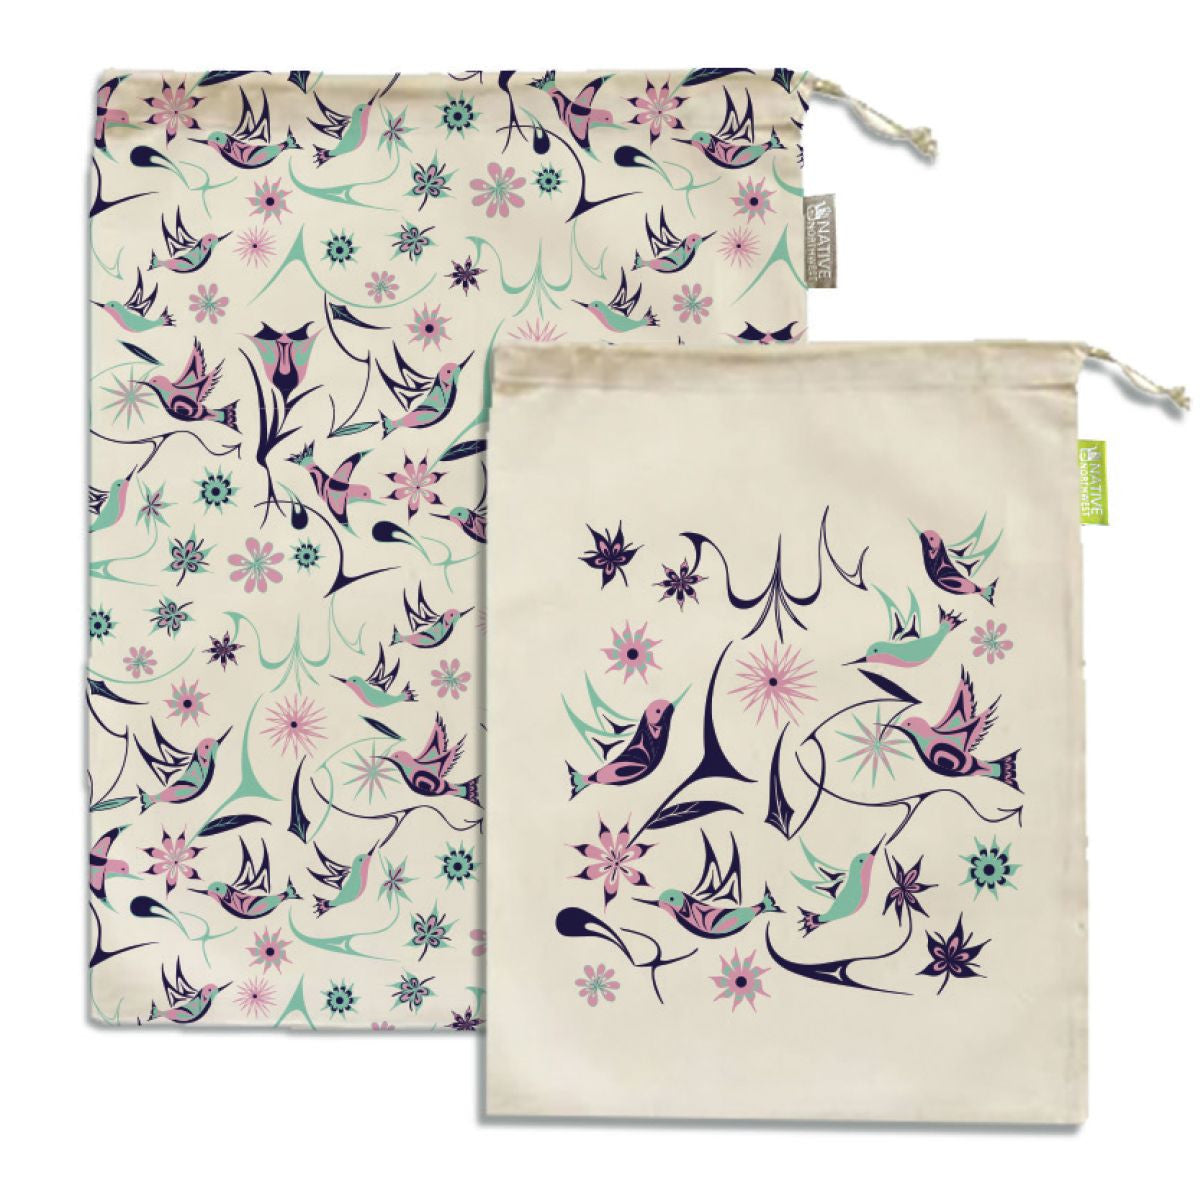 Reusable Produce Bag Set | Hummingbird by Nicole La Rock